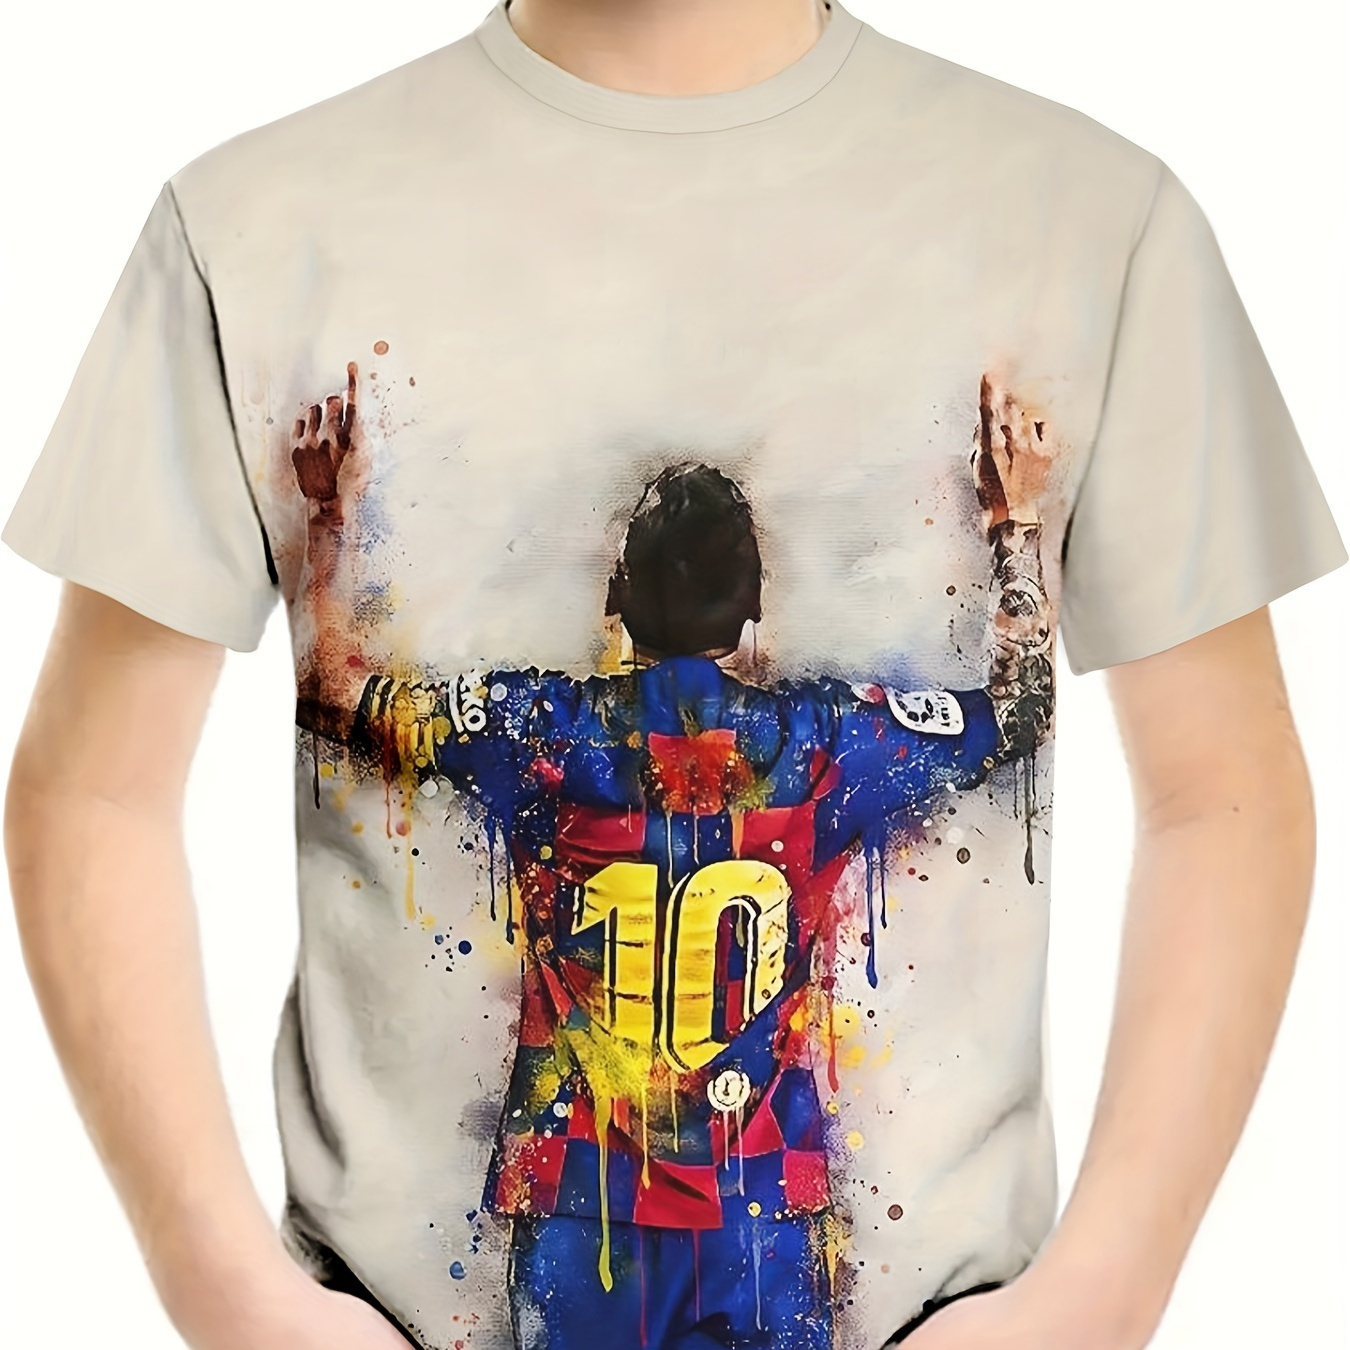 

Soccer Player Graffiti 3d Print Boy's Leisure Short Sleeve Sports T-shirt - Comfortable Summer Outdoor Clothing